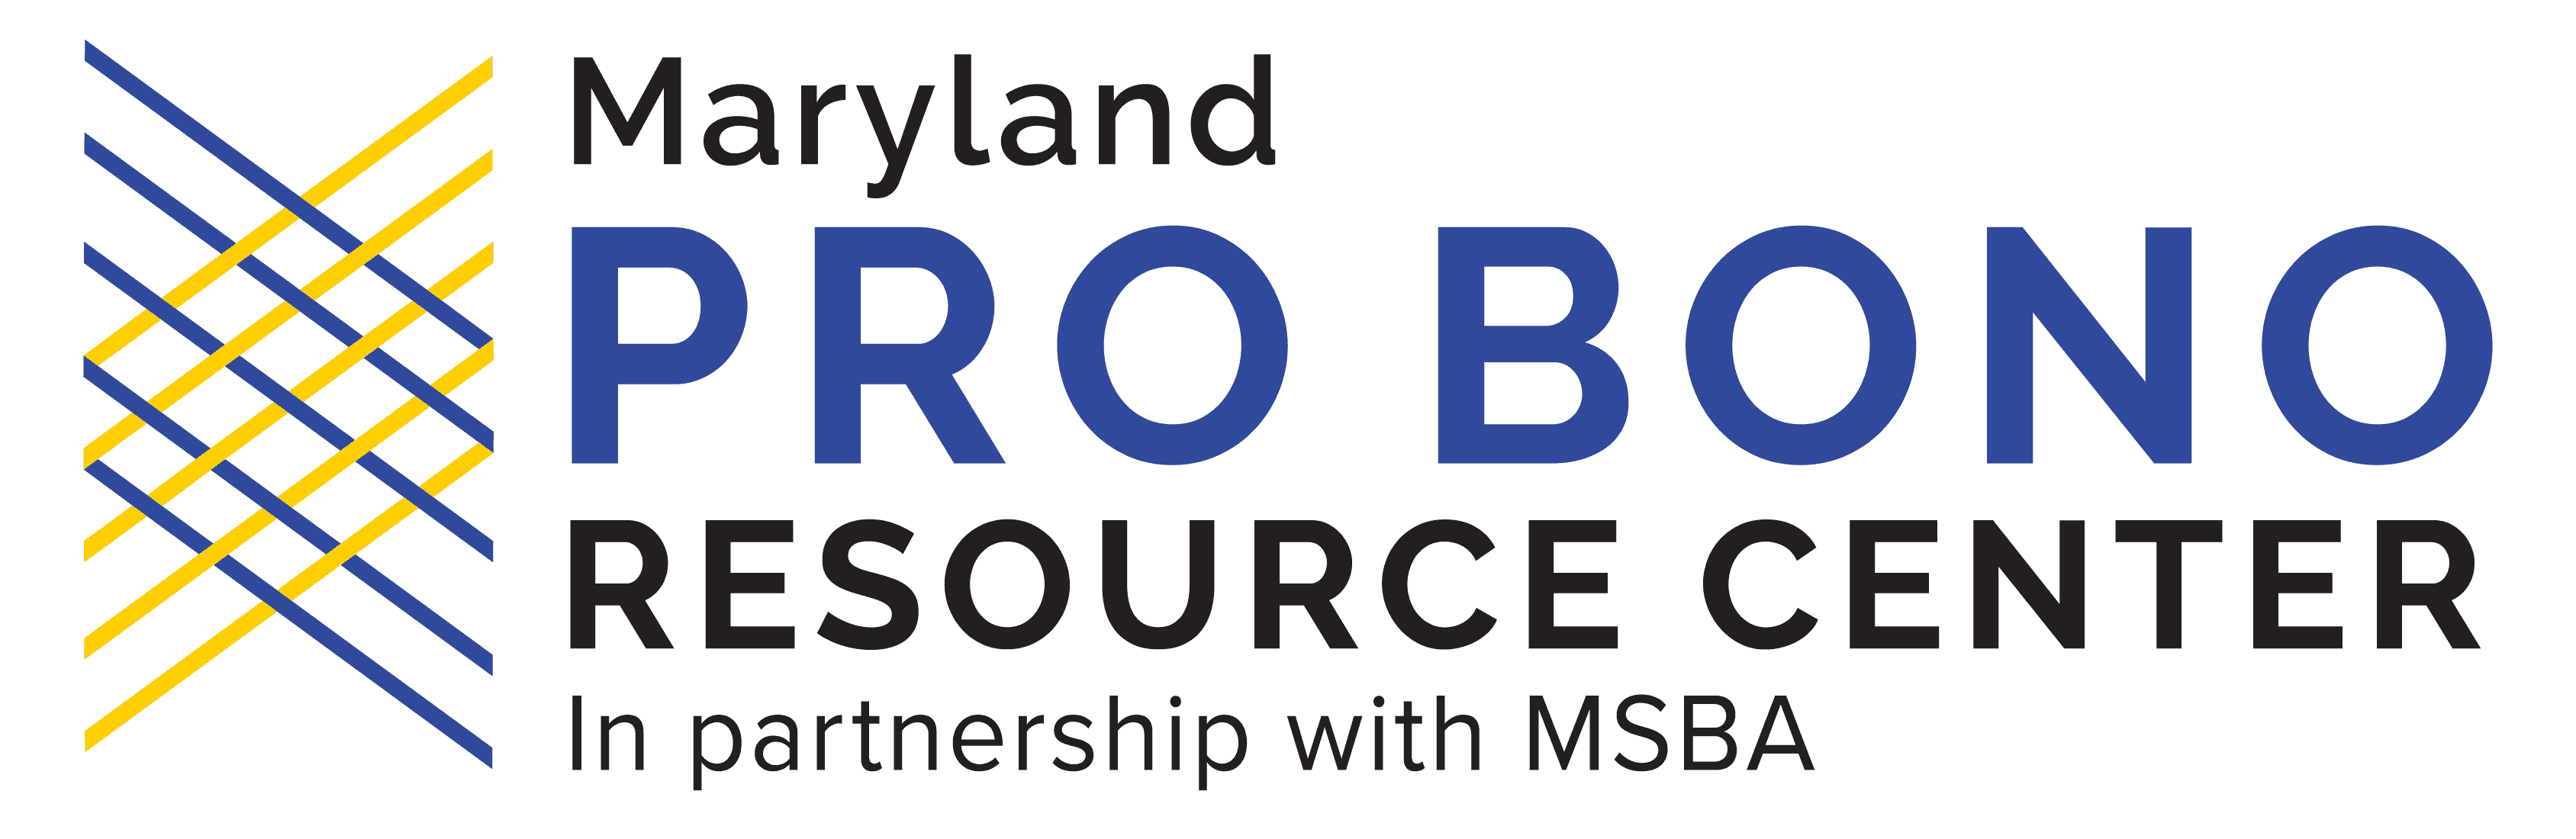 Pro Bono Resource Center-Maryland